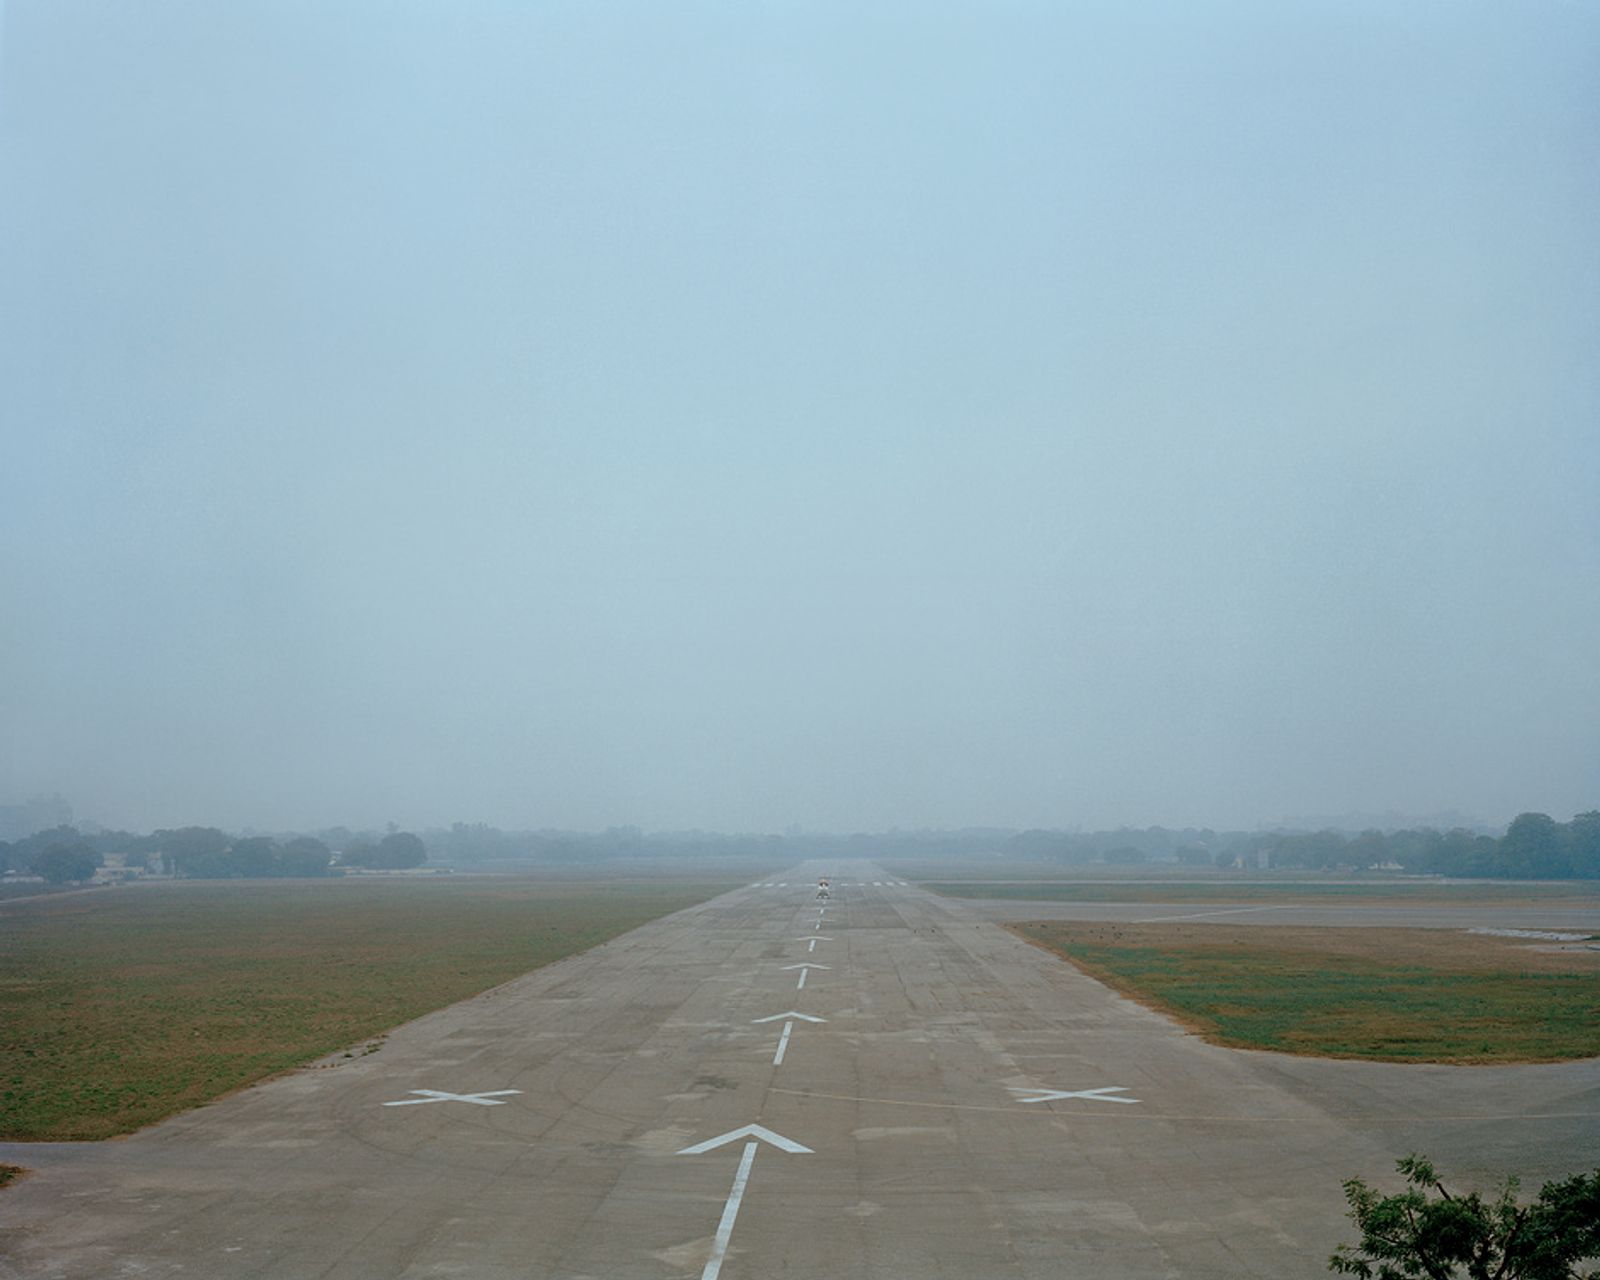 © Bharat Sikka - Safdurjung Airport, New Deli 2003